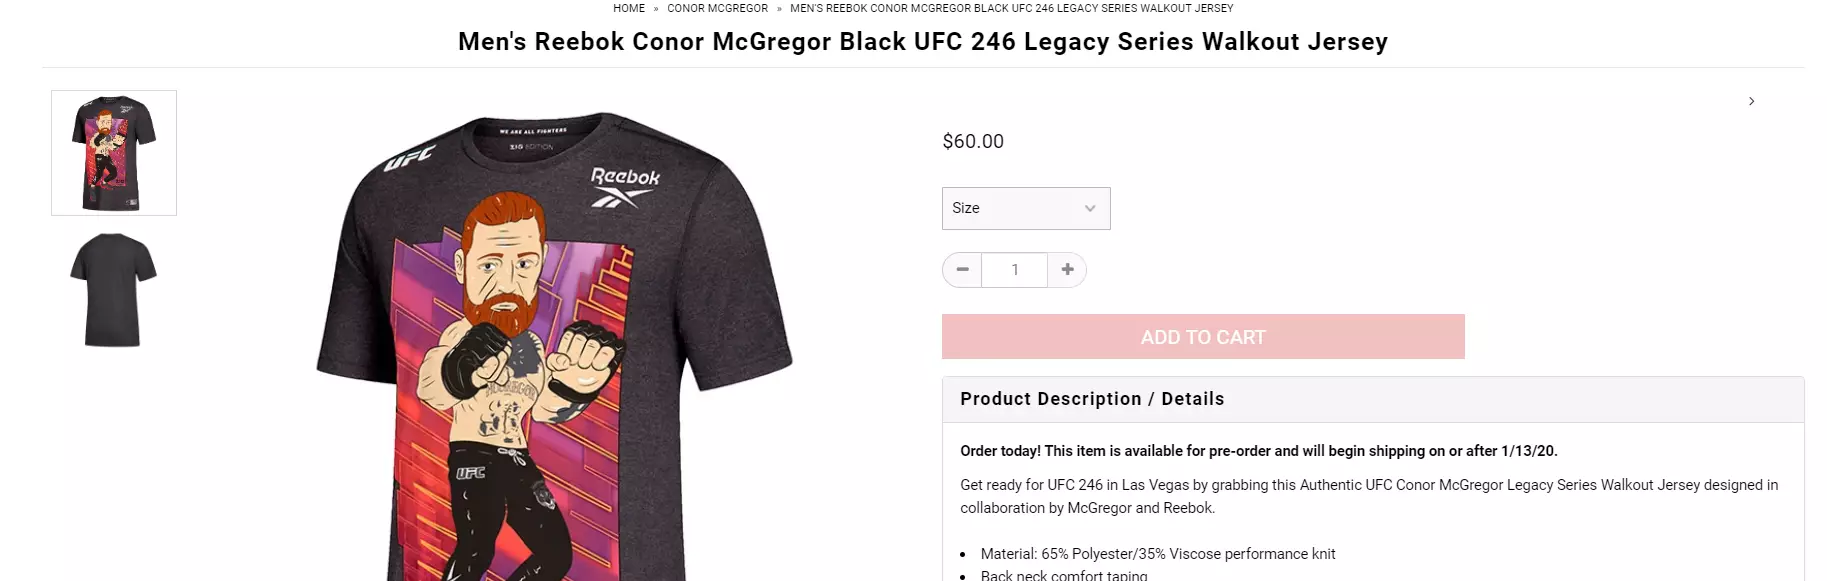 The McGregor shirt available online. Image: UFC.com